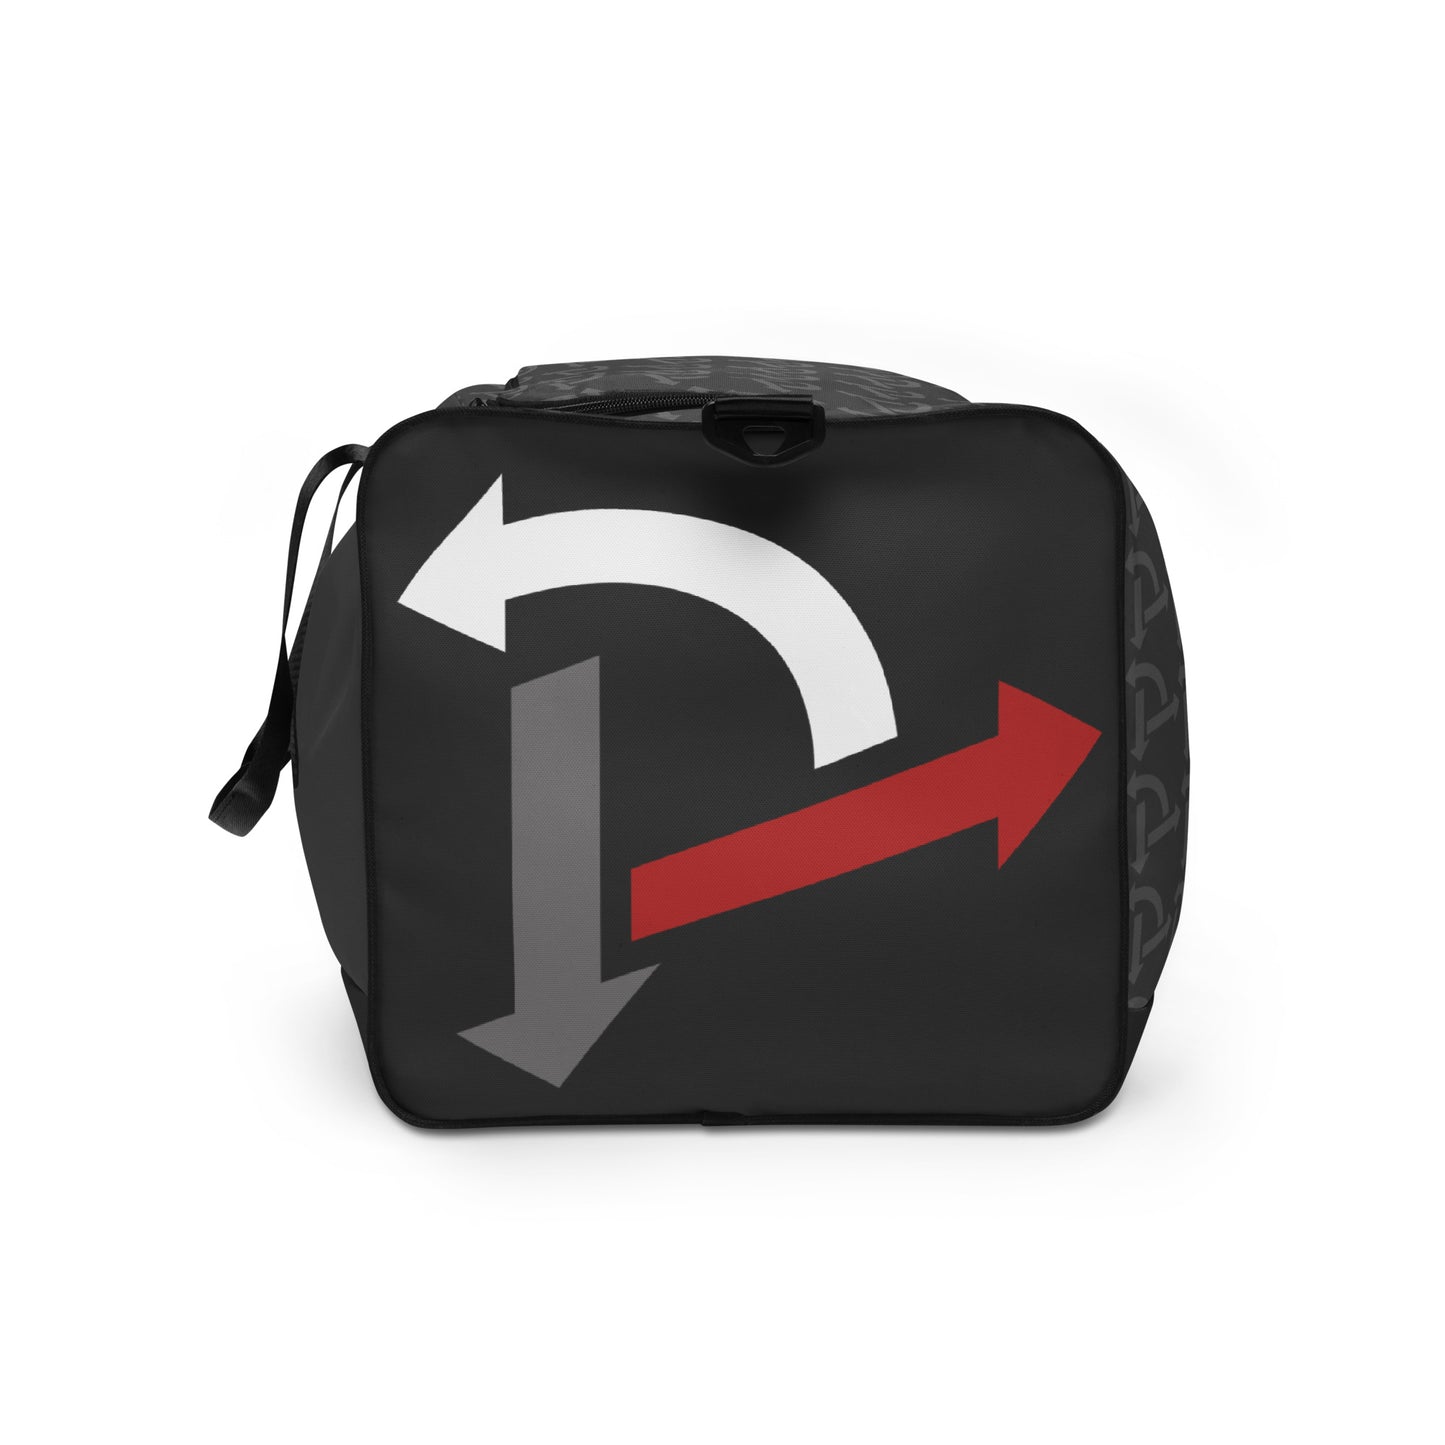 Trials Gear/Duffle Bag